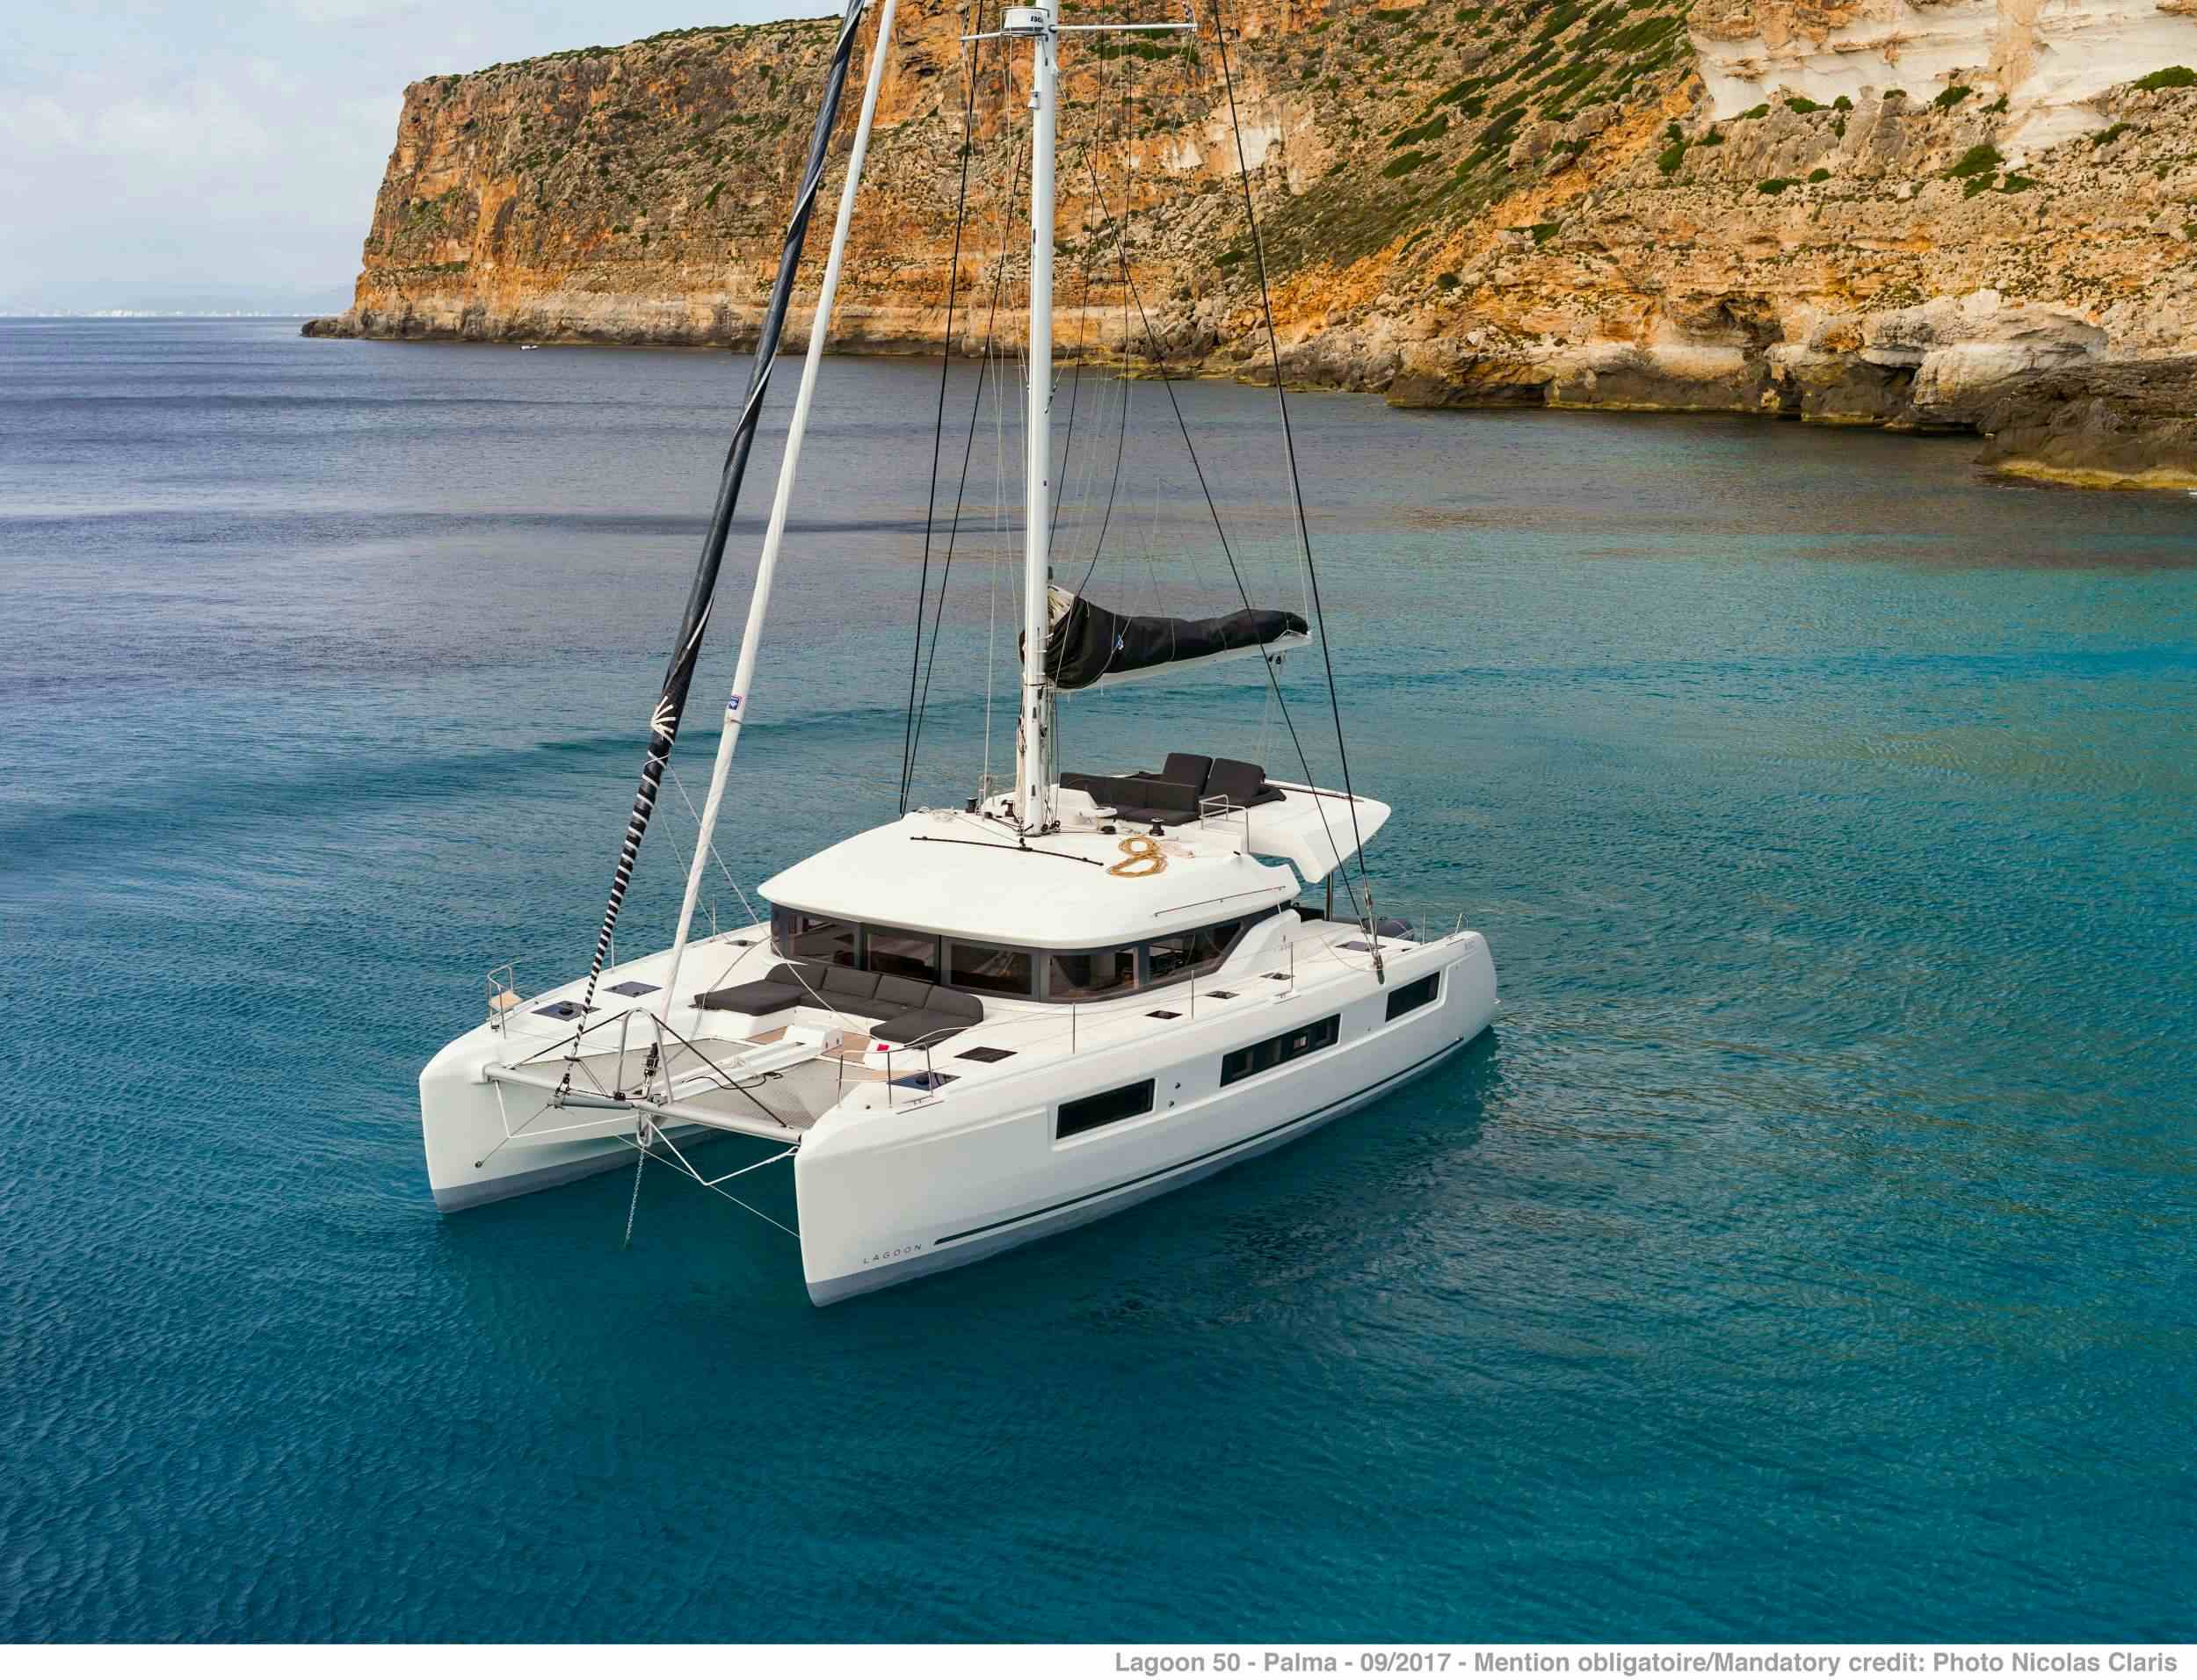 ONEIDA 2 - Yacht Charter Kalamata & Boat hire in Greece 1